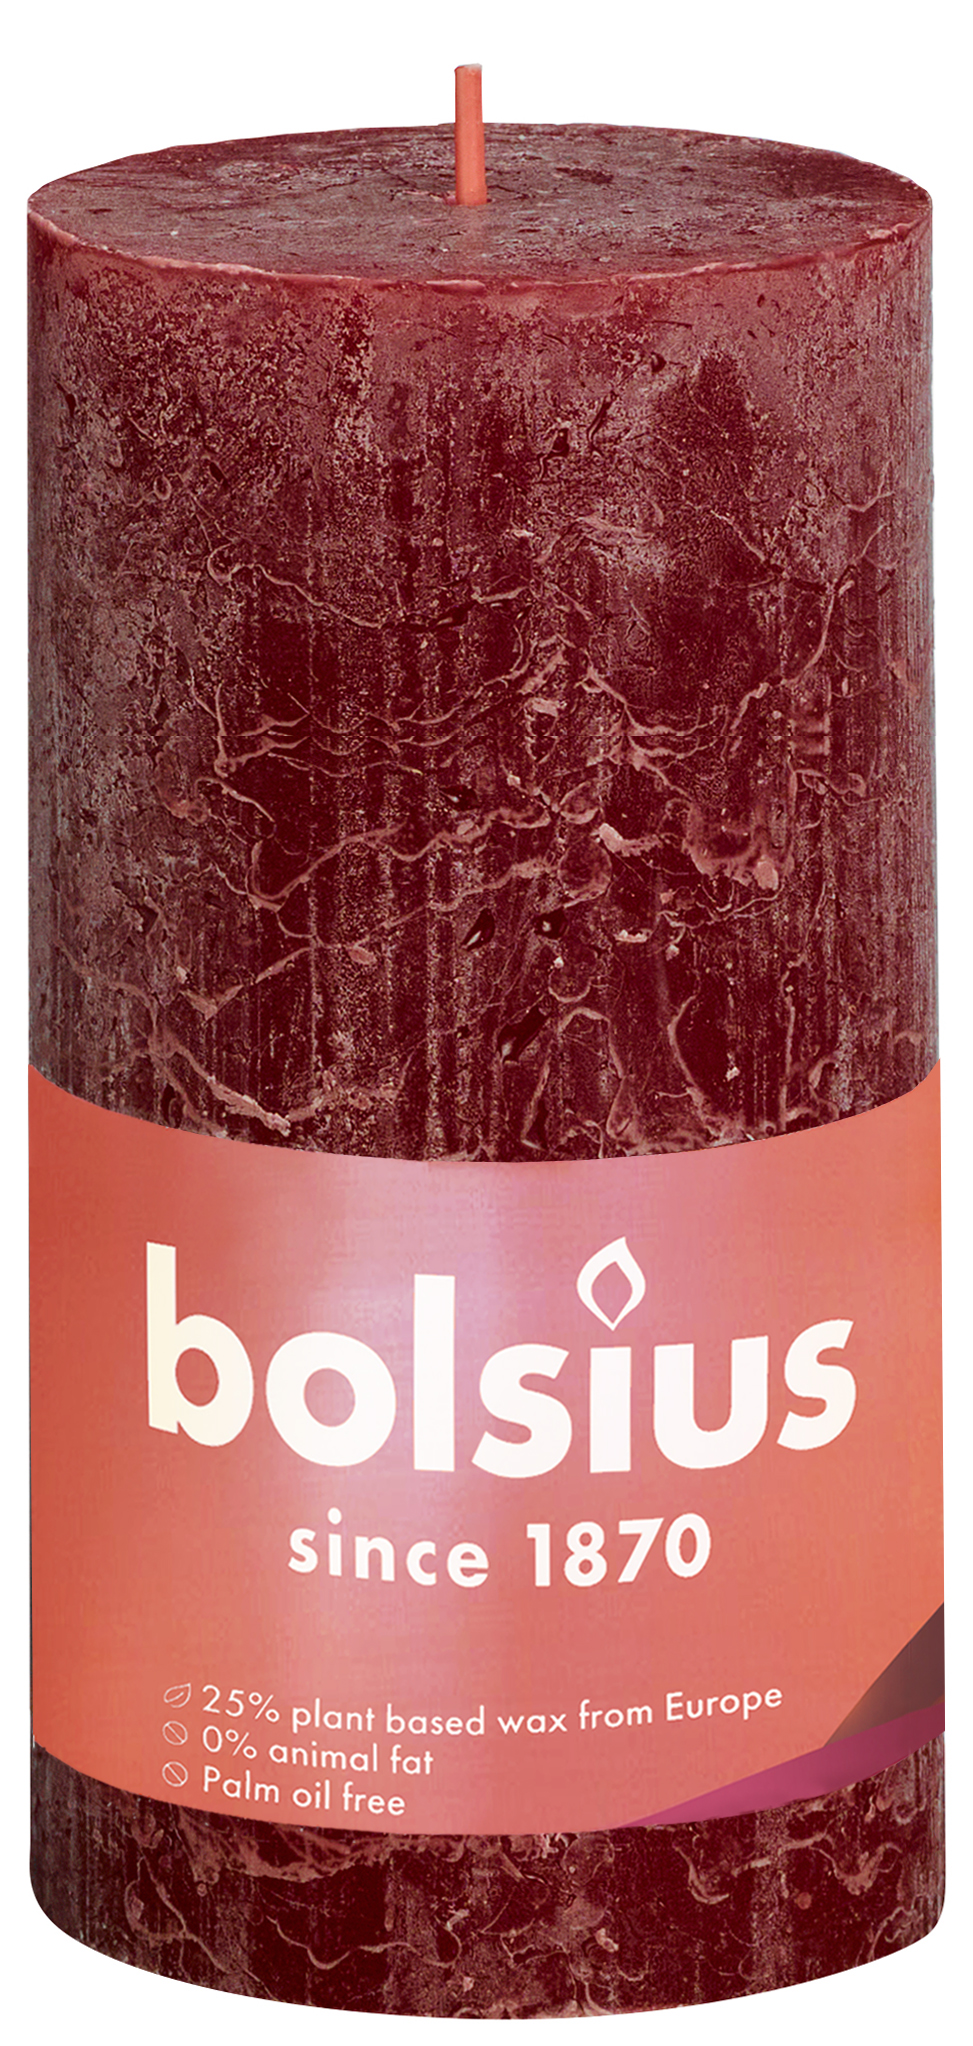 Bolsius stompkaars rustiek d6.8h13cm